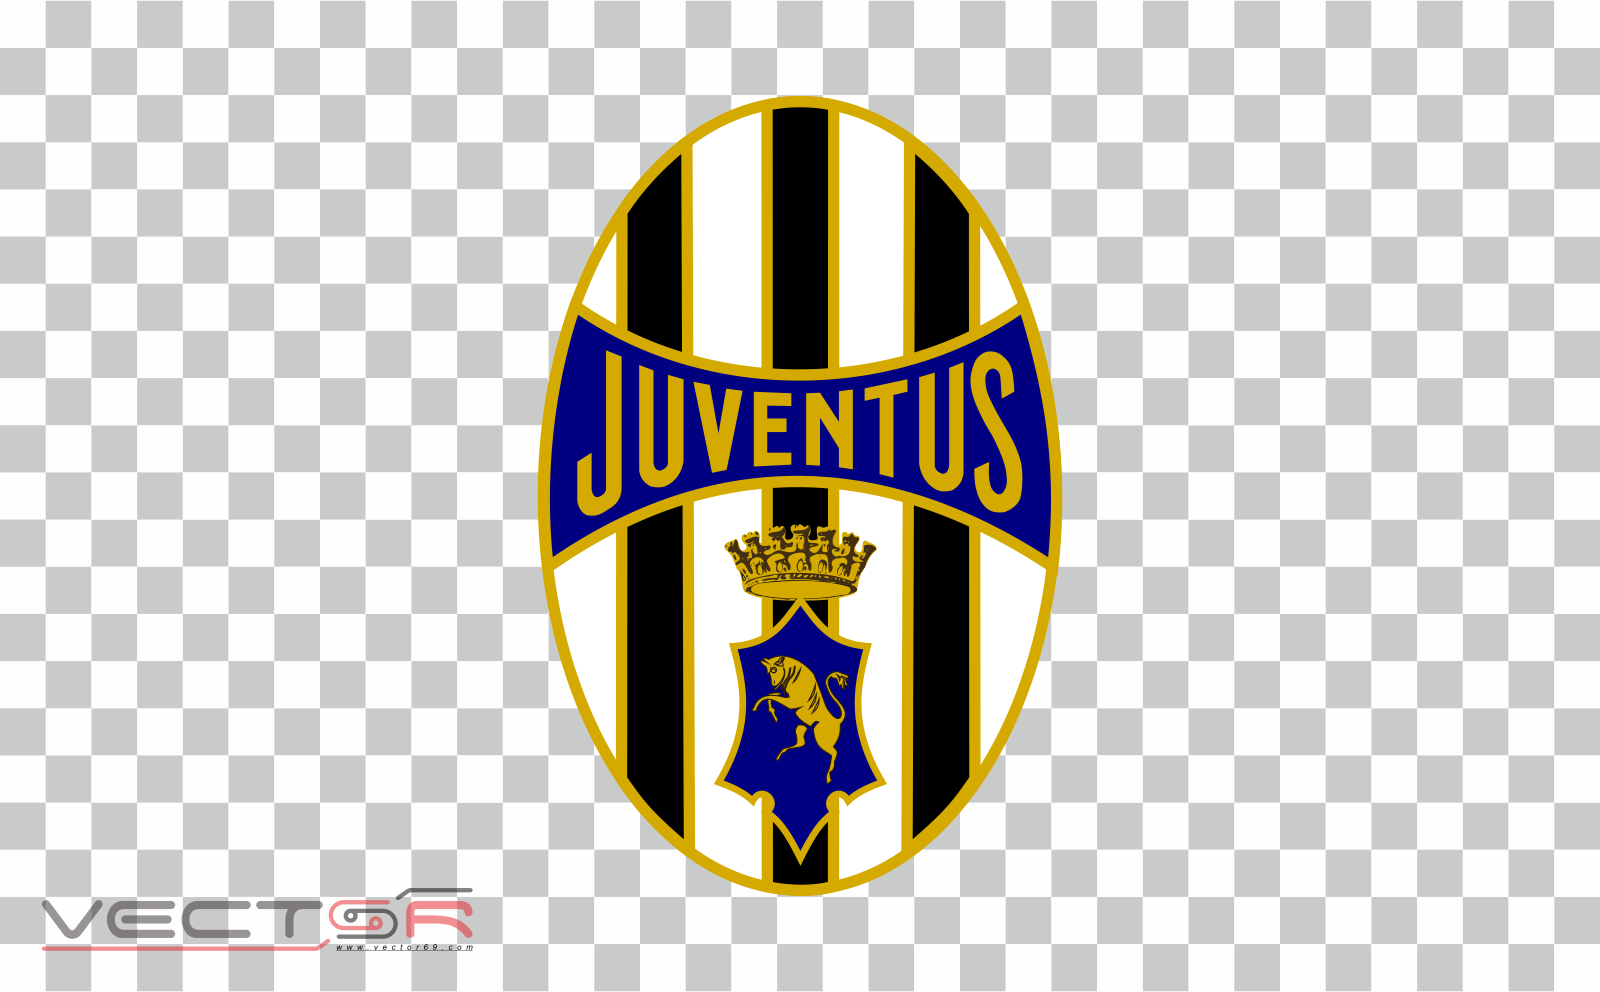 Juventus F.C. (1921) Logo - Download .PNG (Portable Network Graphics) Transparent Images